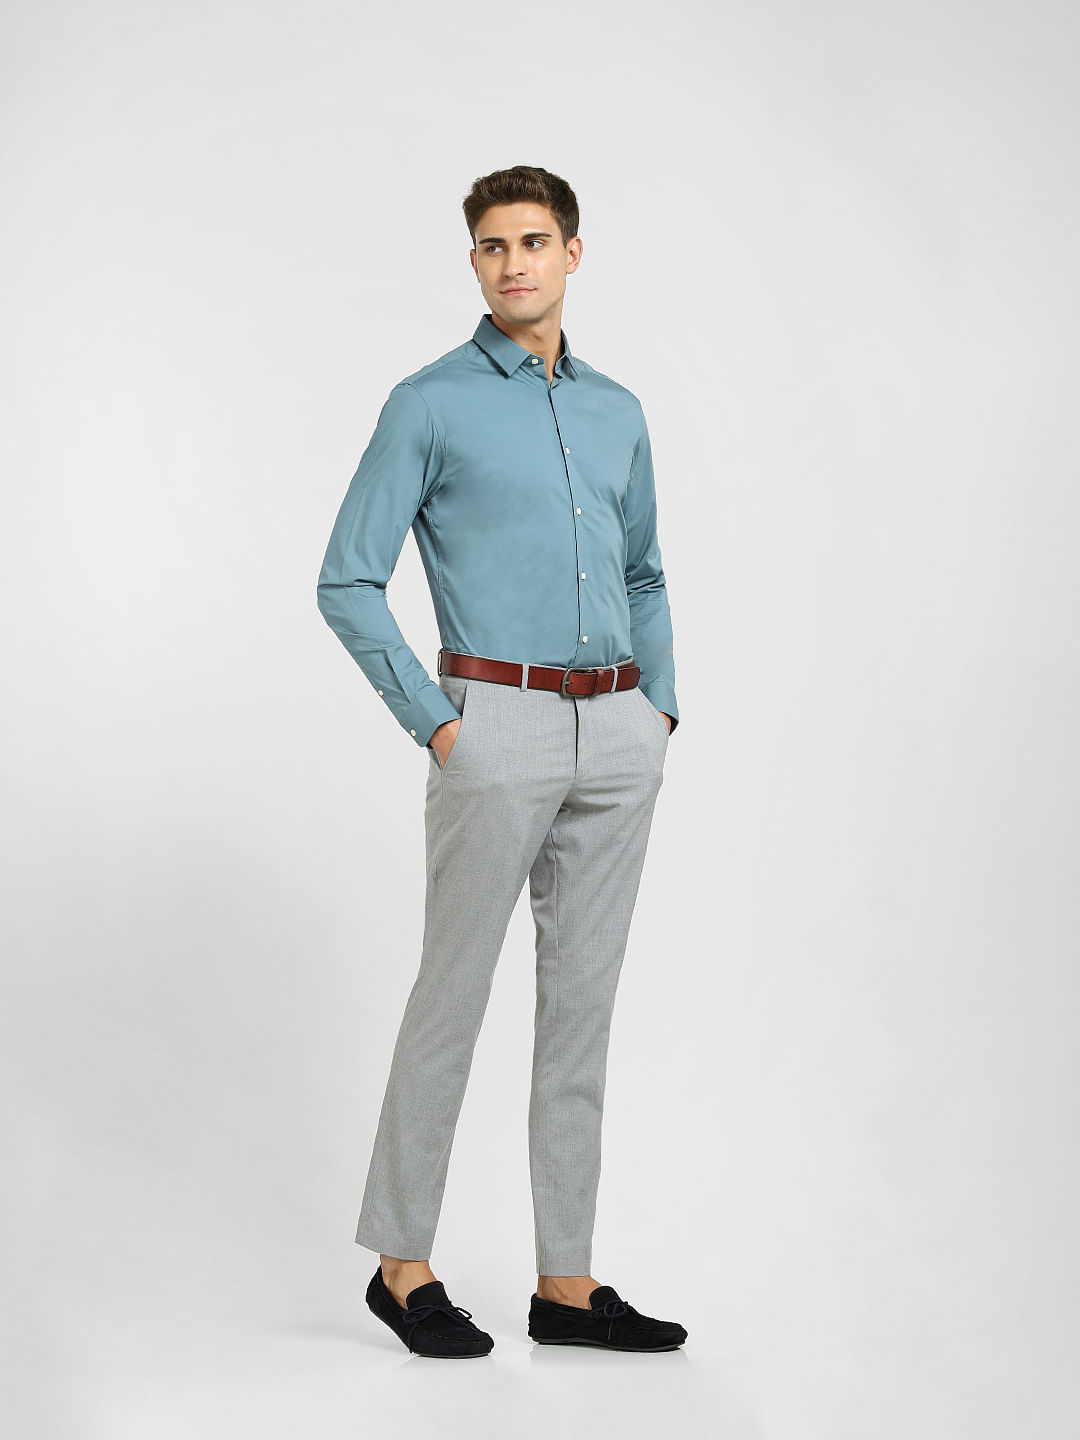 Grey Shirt Matching Pant Ideas  Grey Shirt Combination Pants  TiptopGents